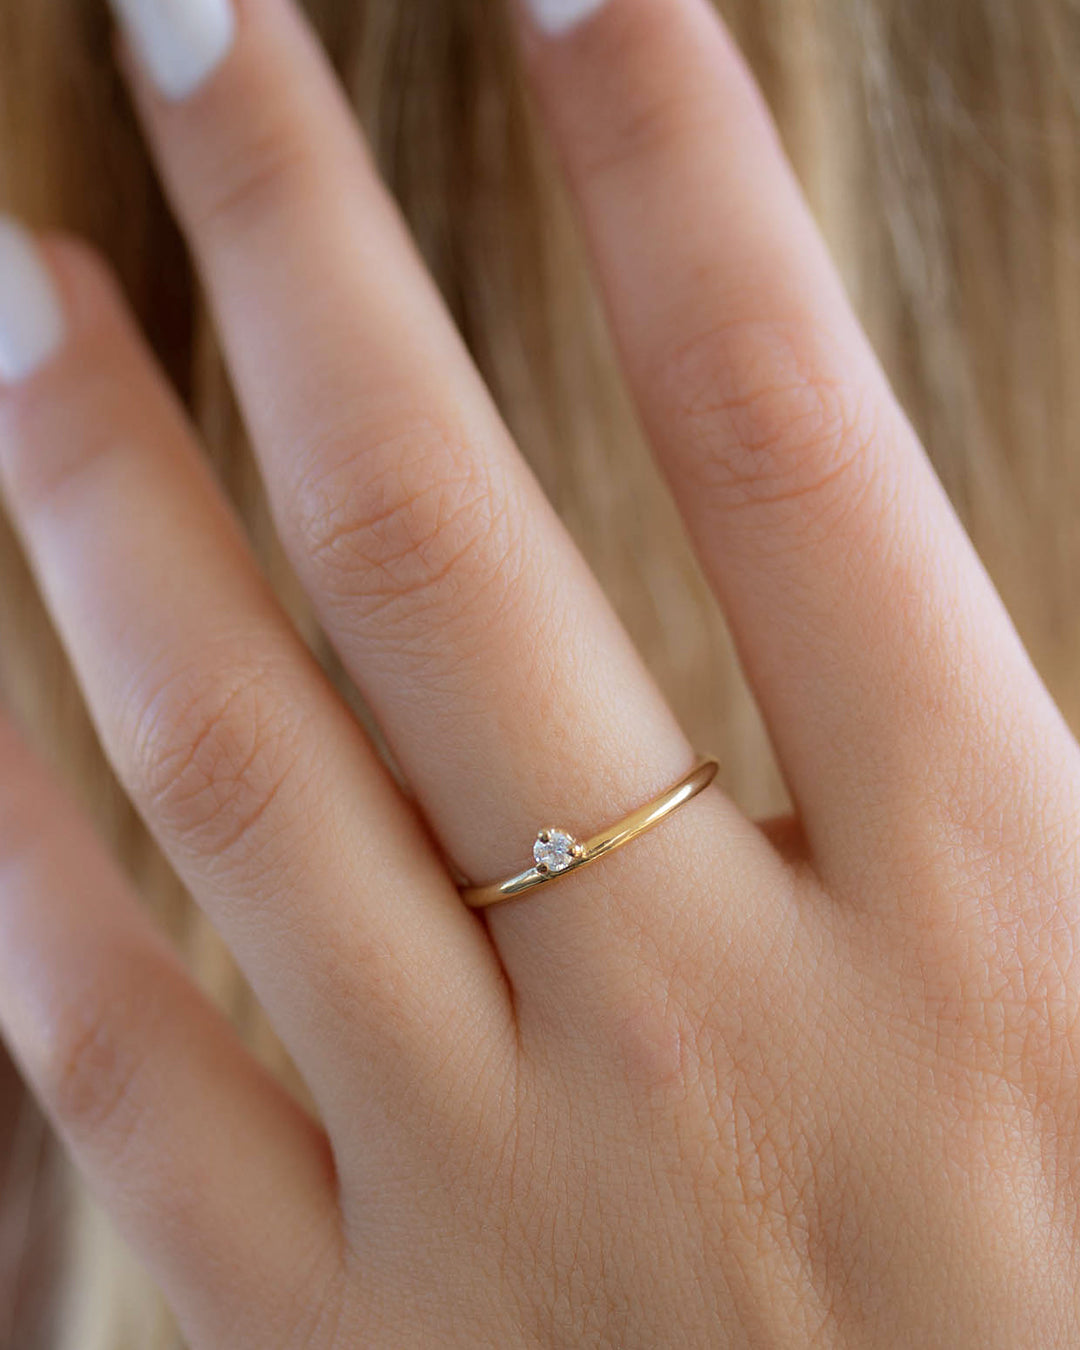 Amazing 0.60 Ct Off White Solitaire Diamond Massive Ring with Small Diamond  | eBay